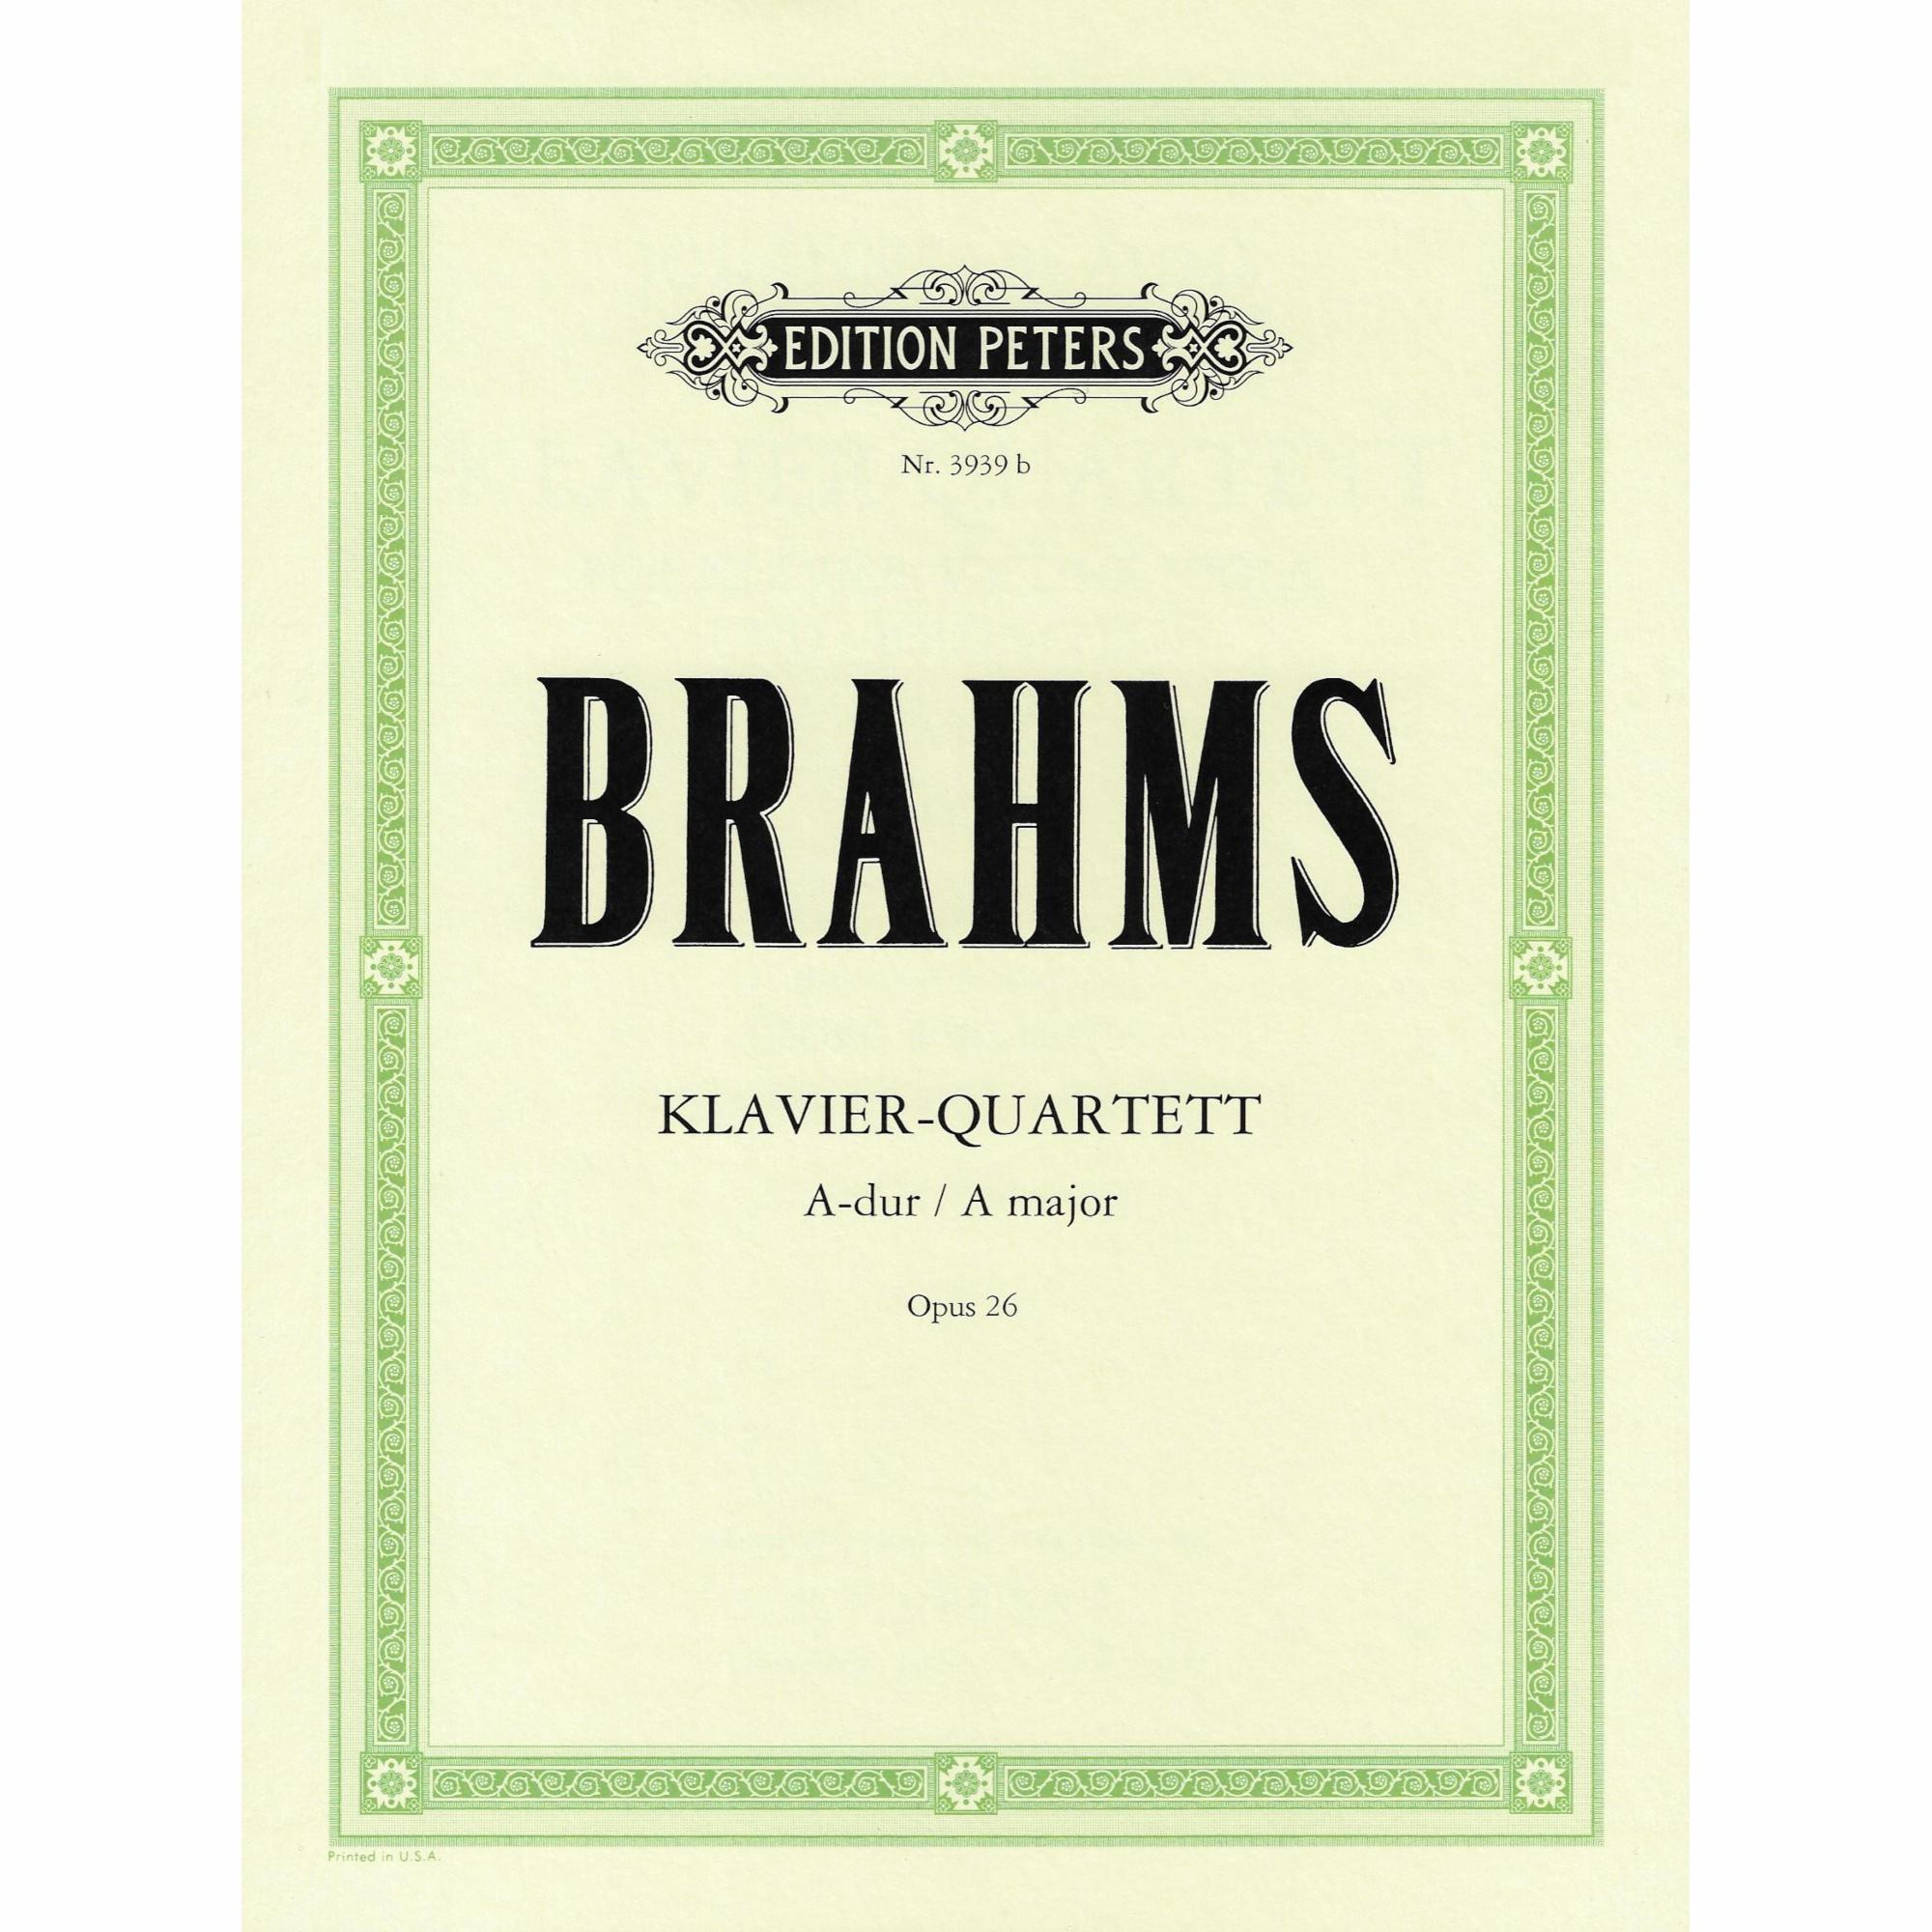 Brahms -- Piano Quartet in A Major, Op. 26